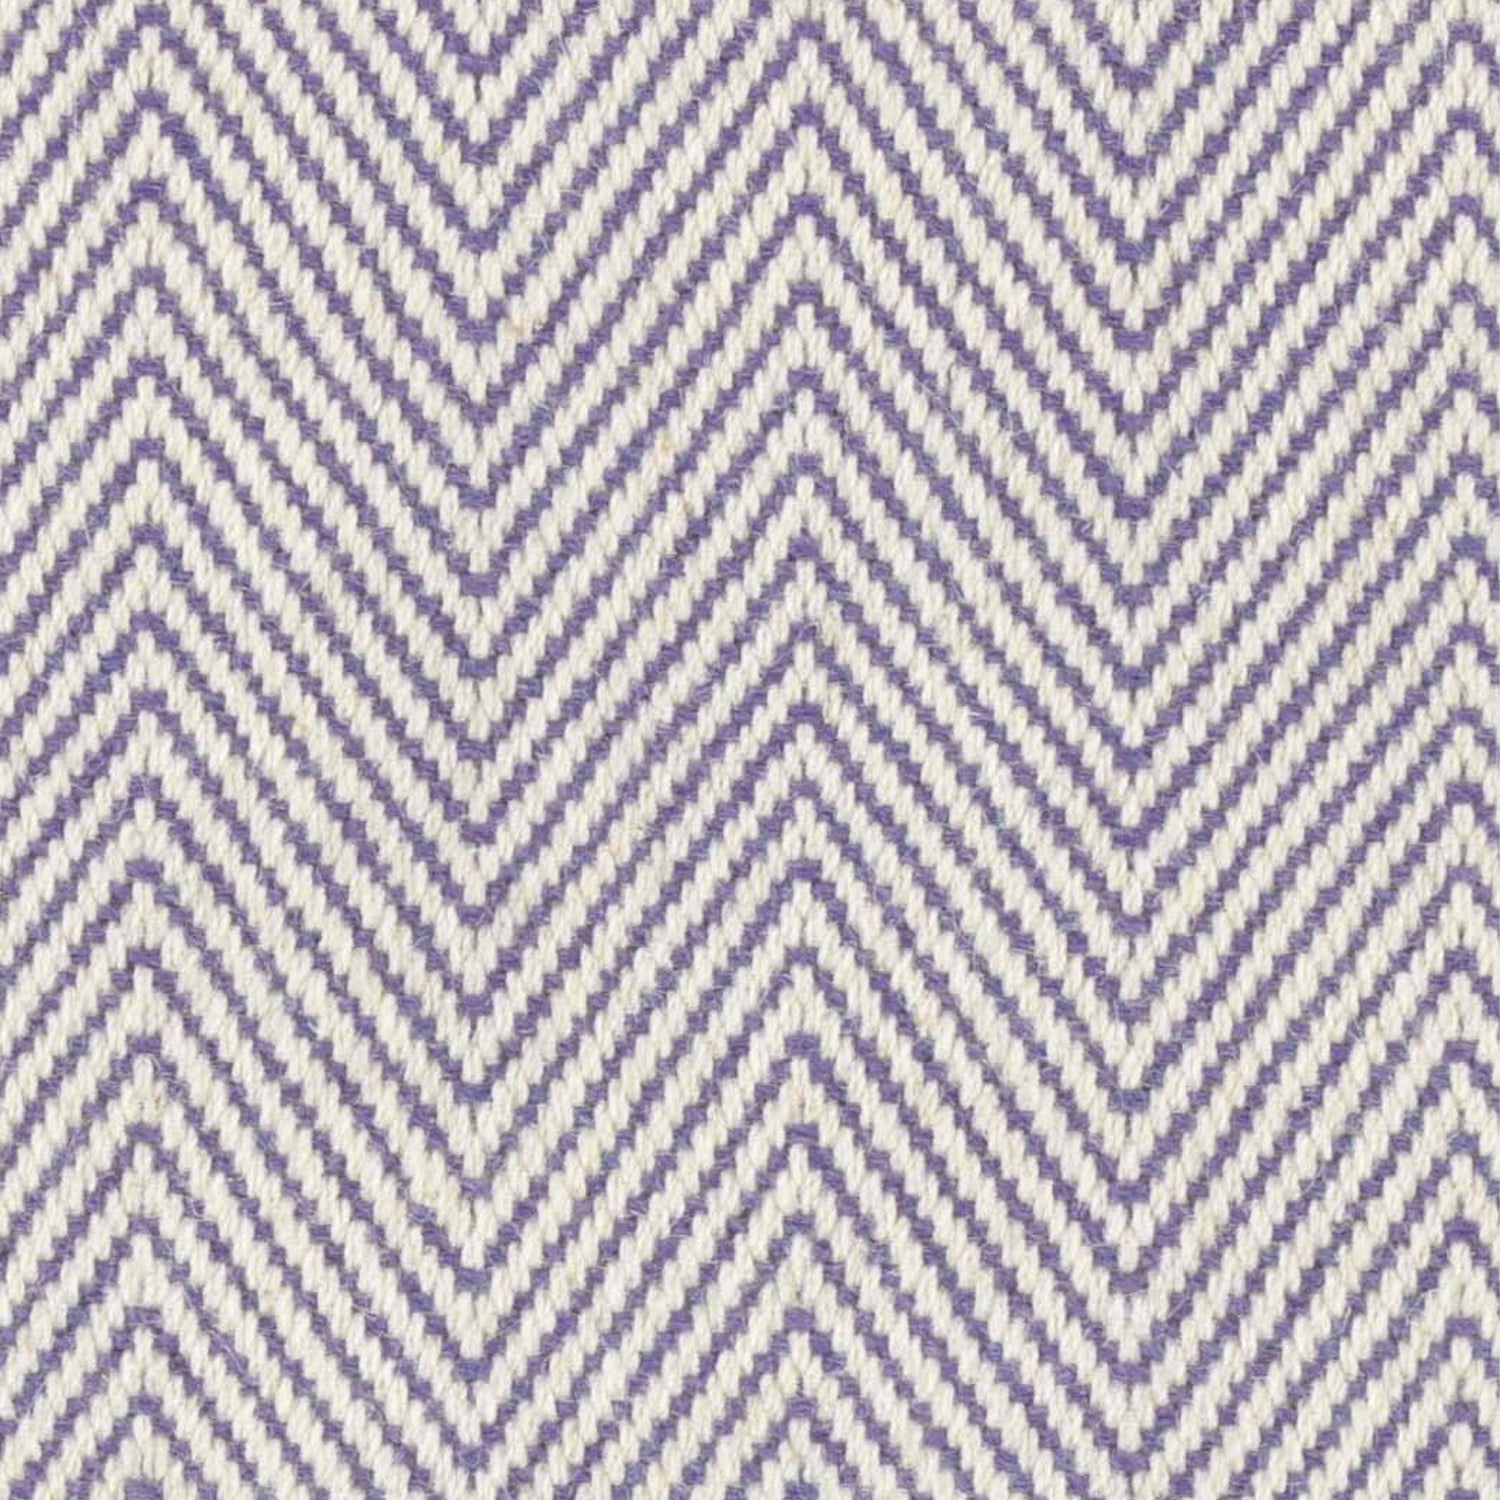 Wool broadloom carpet swatch in a herringbone weave in purple and cream.